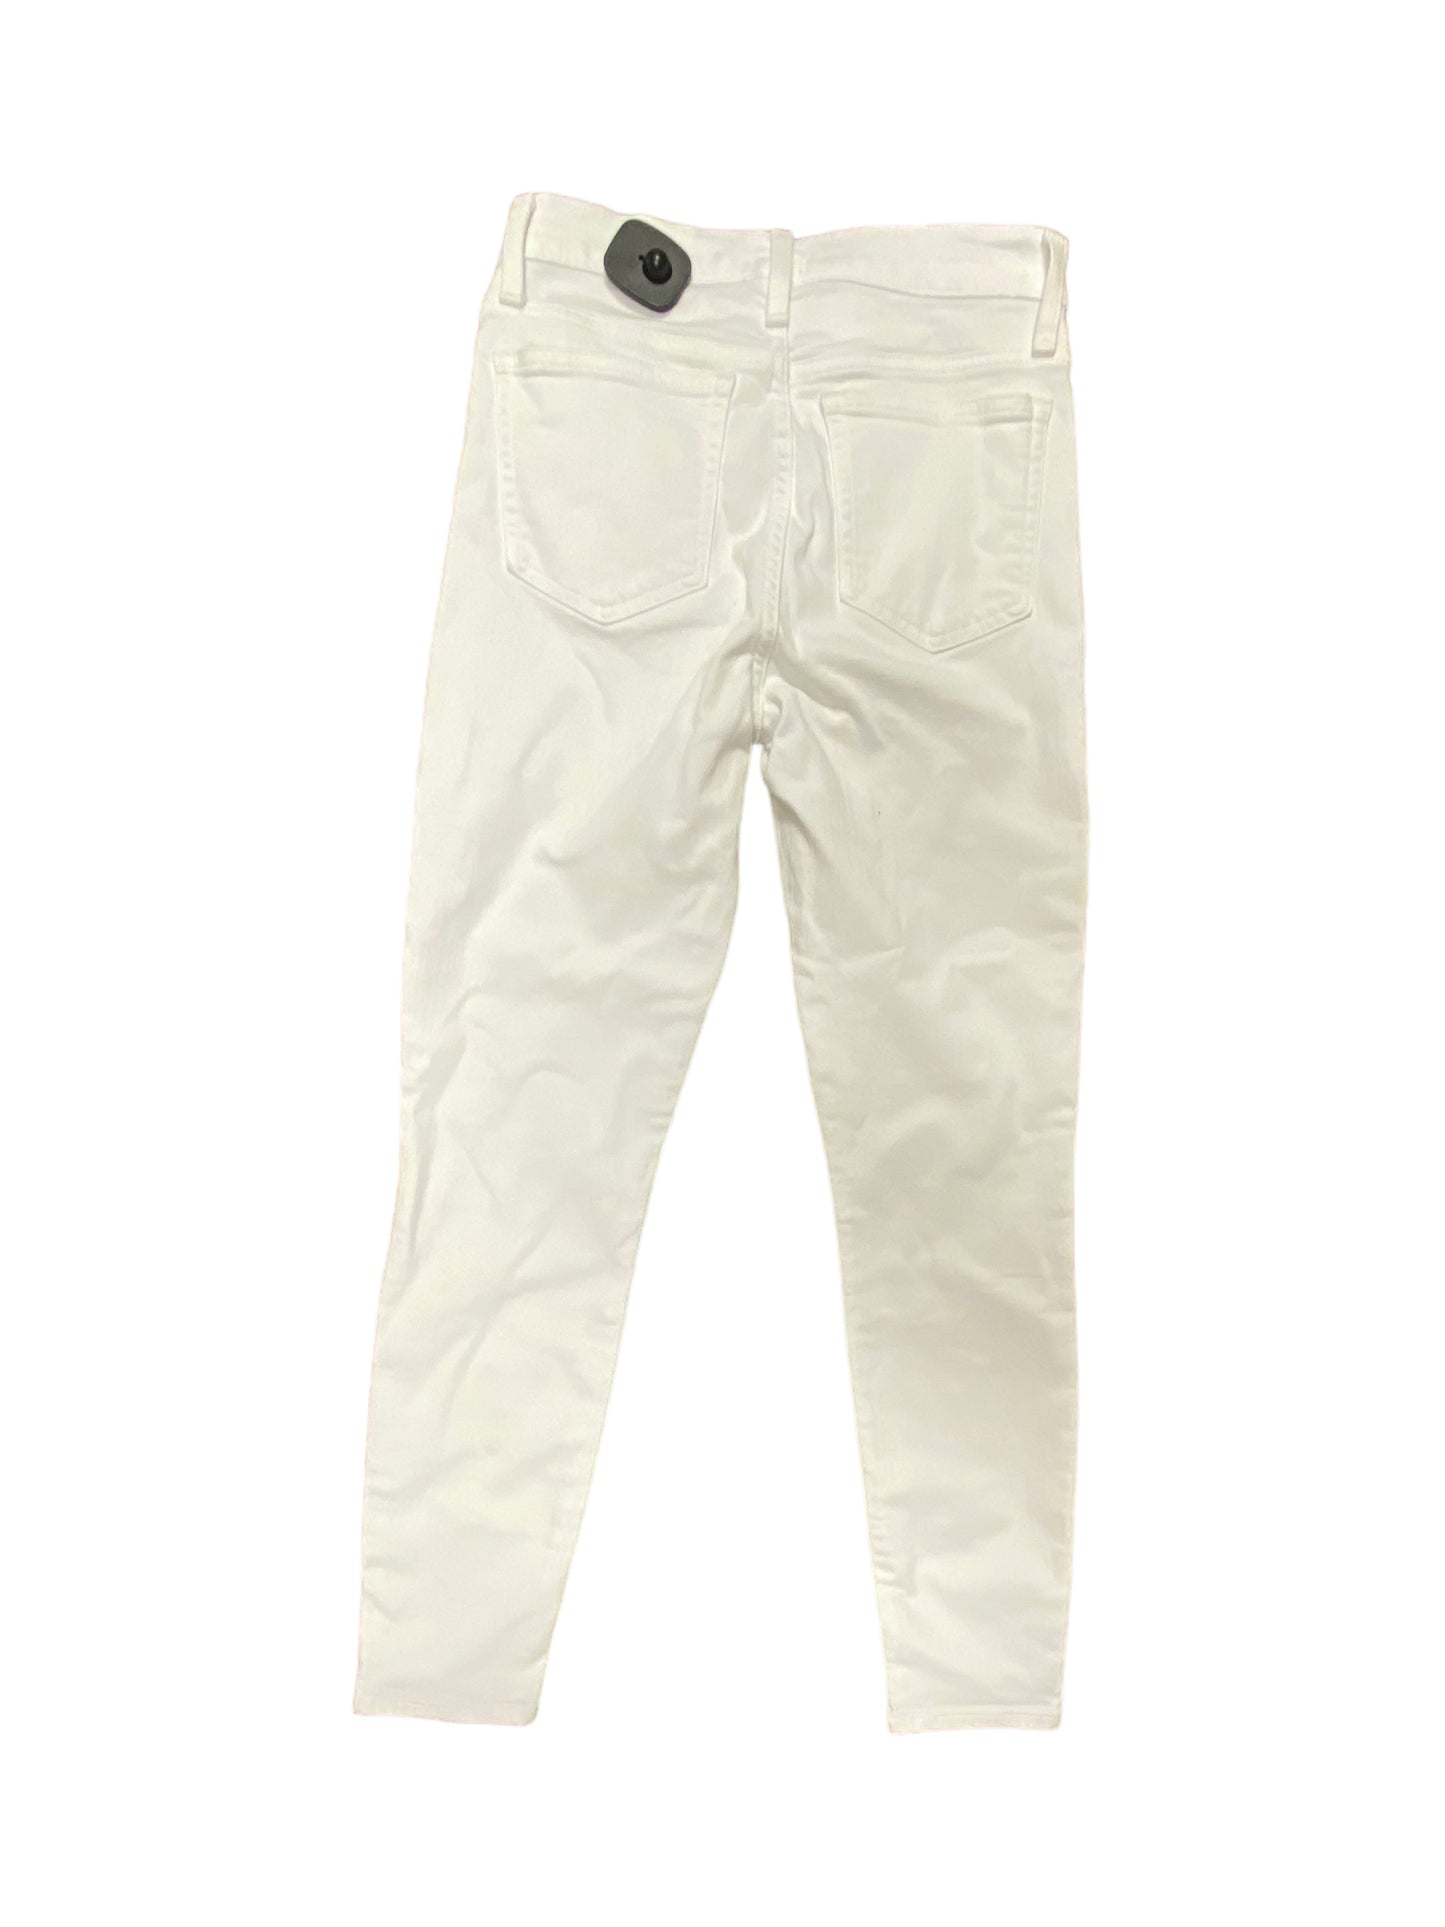 White Jeans Skinny J. Crew, Size 6